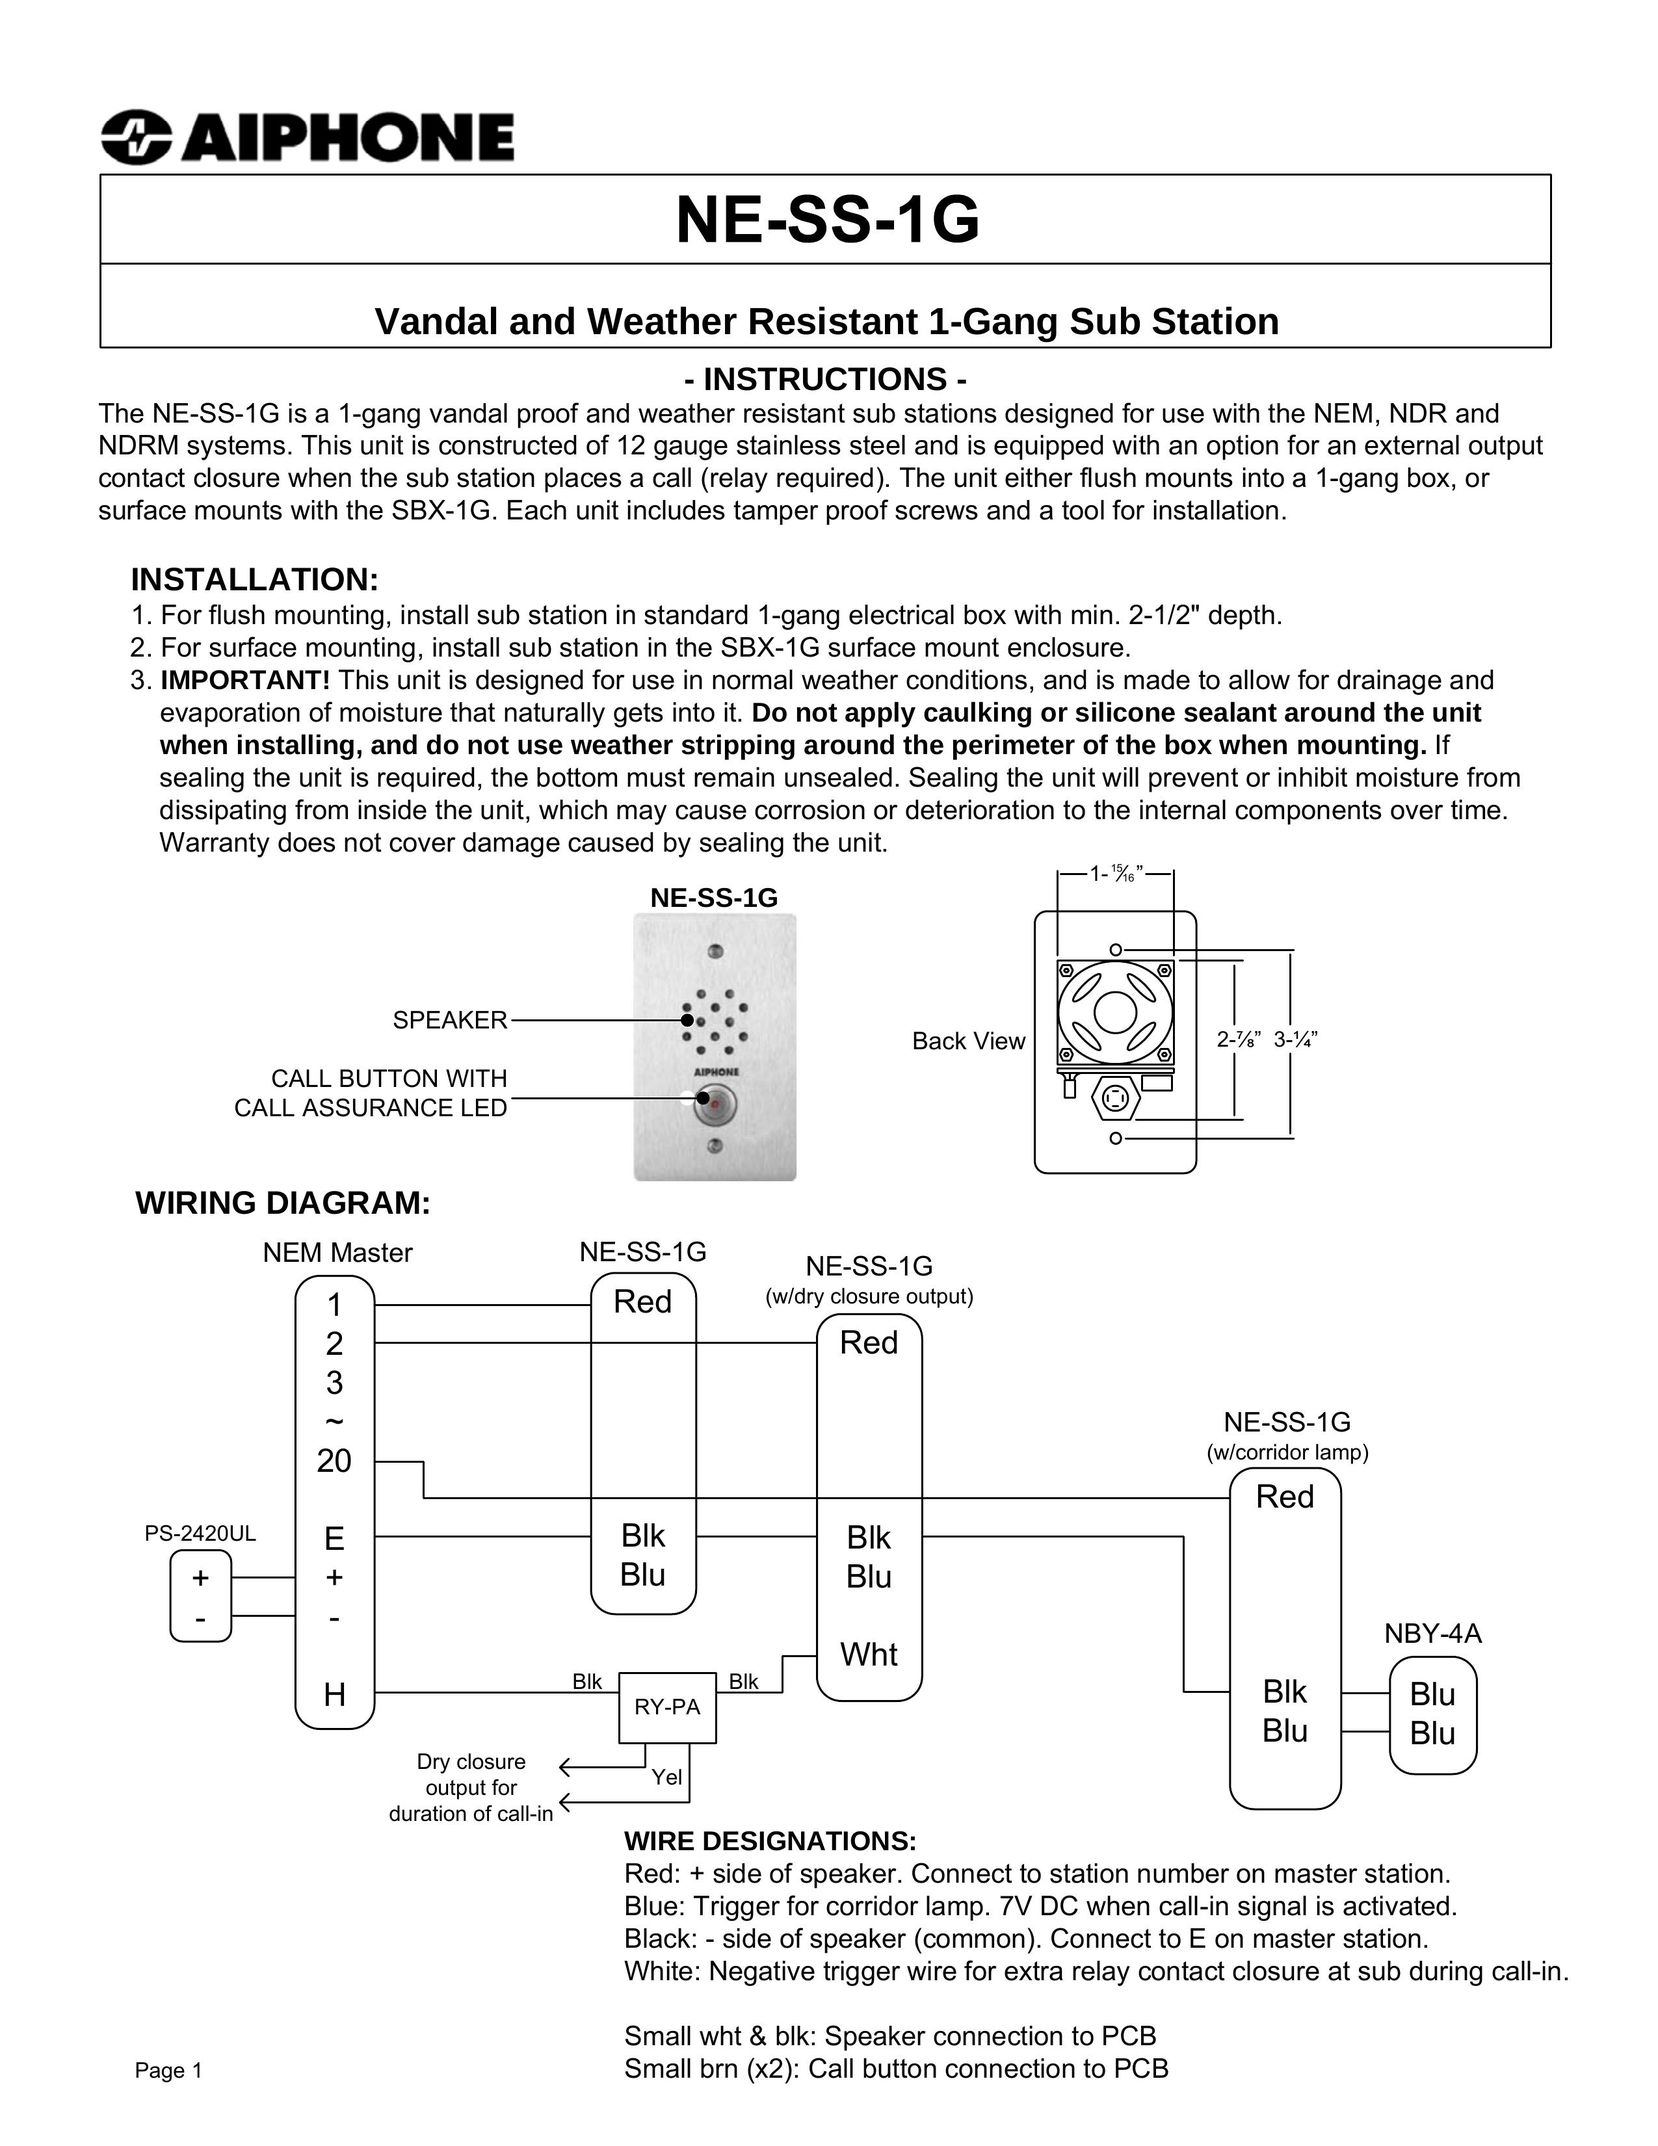 Aiphone NE-SS-1G Welder User Manual